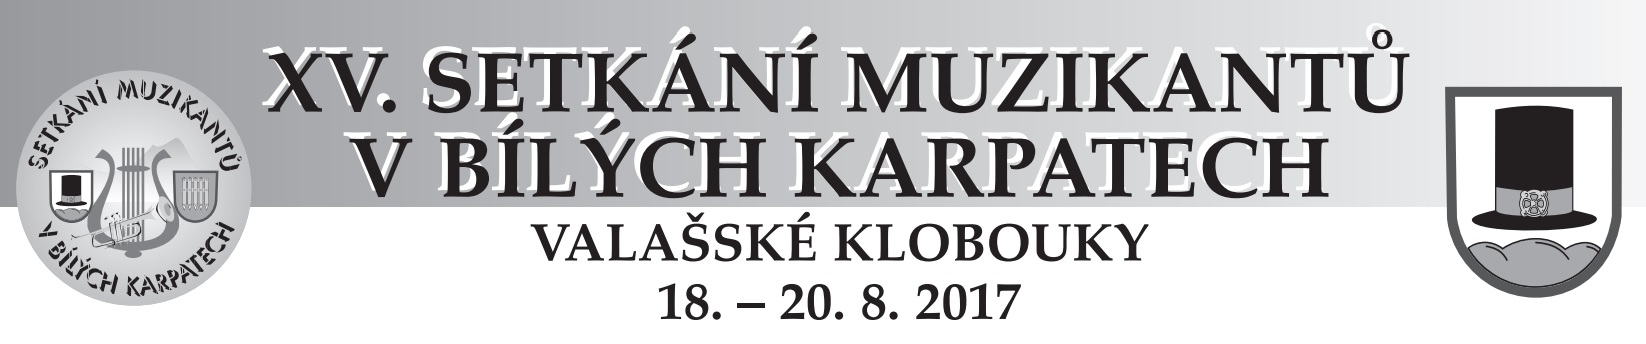 XV. Setkn muzikant v Blch Karpatech 2017 Valask Klobouky